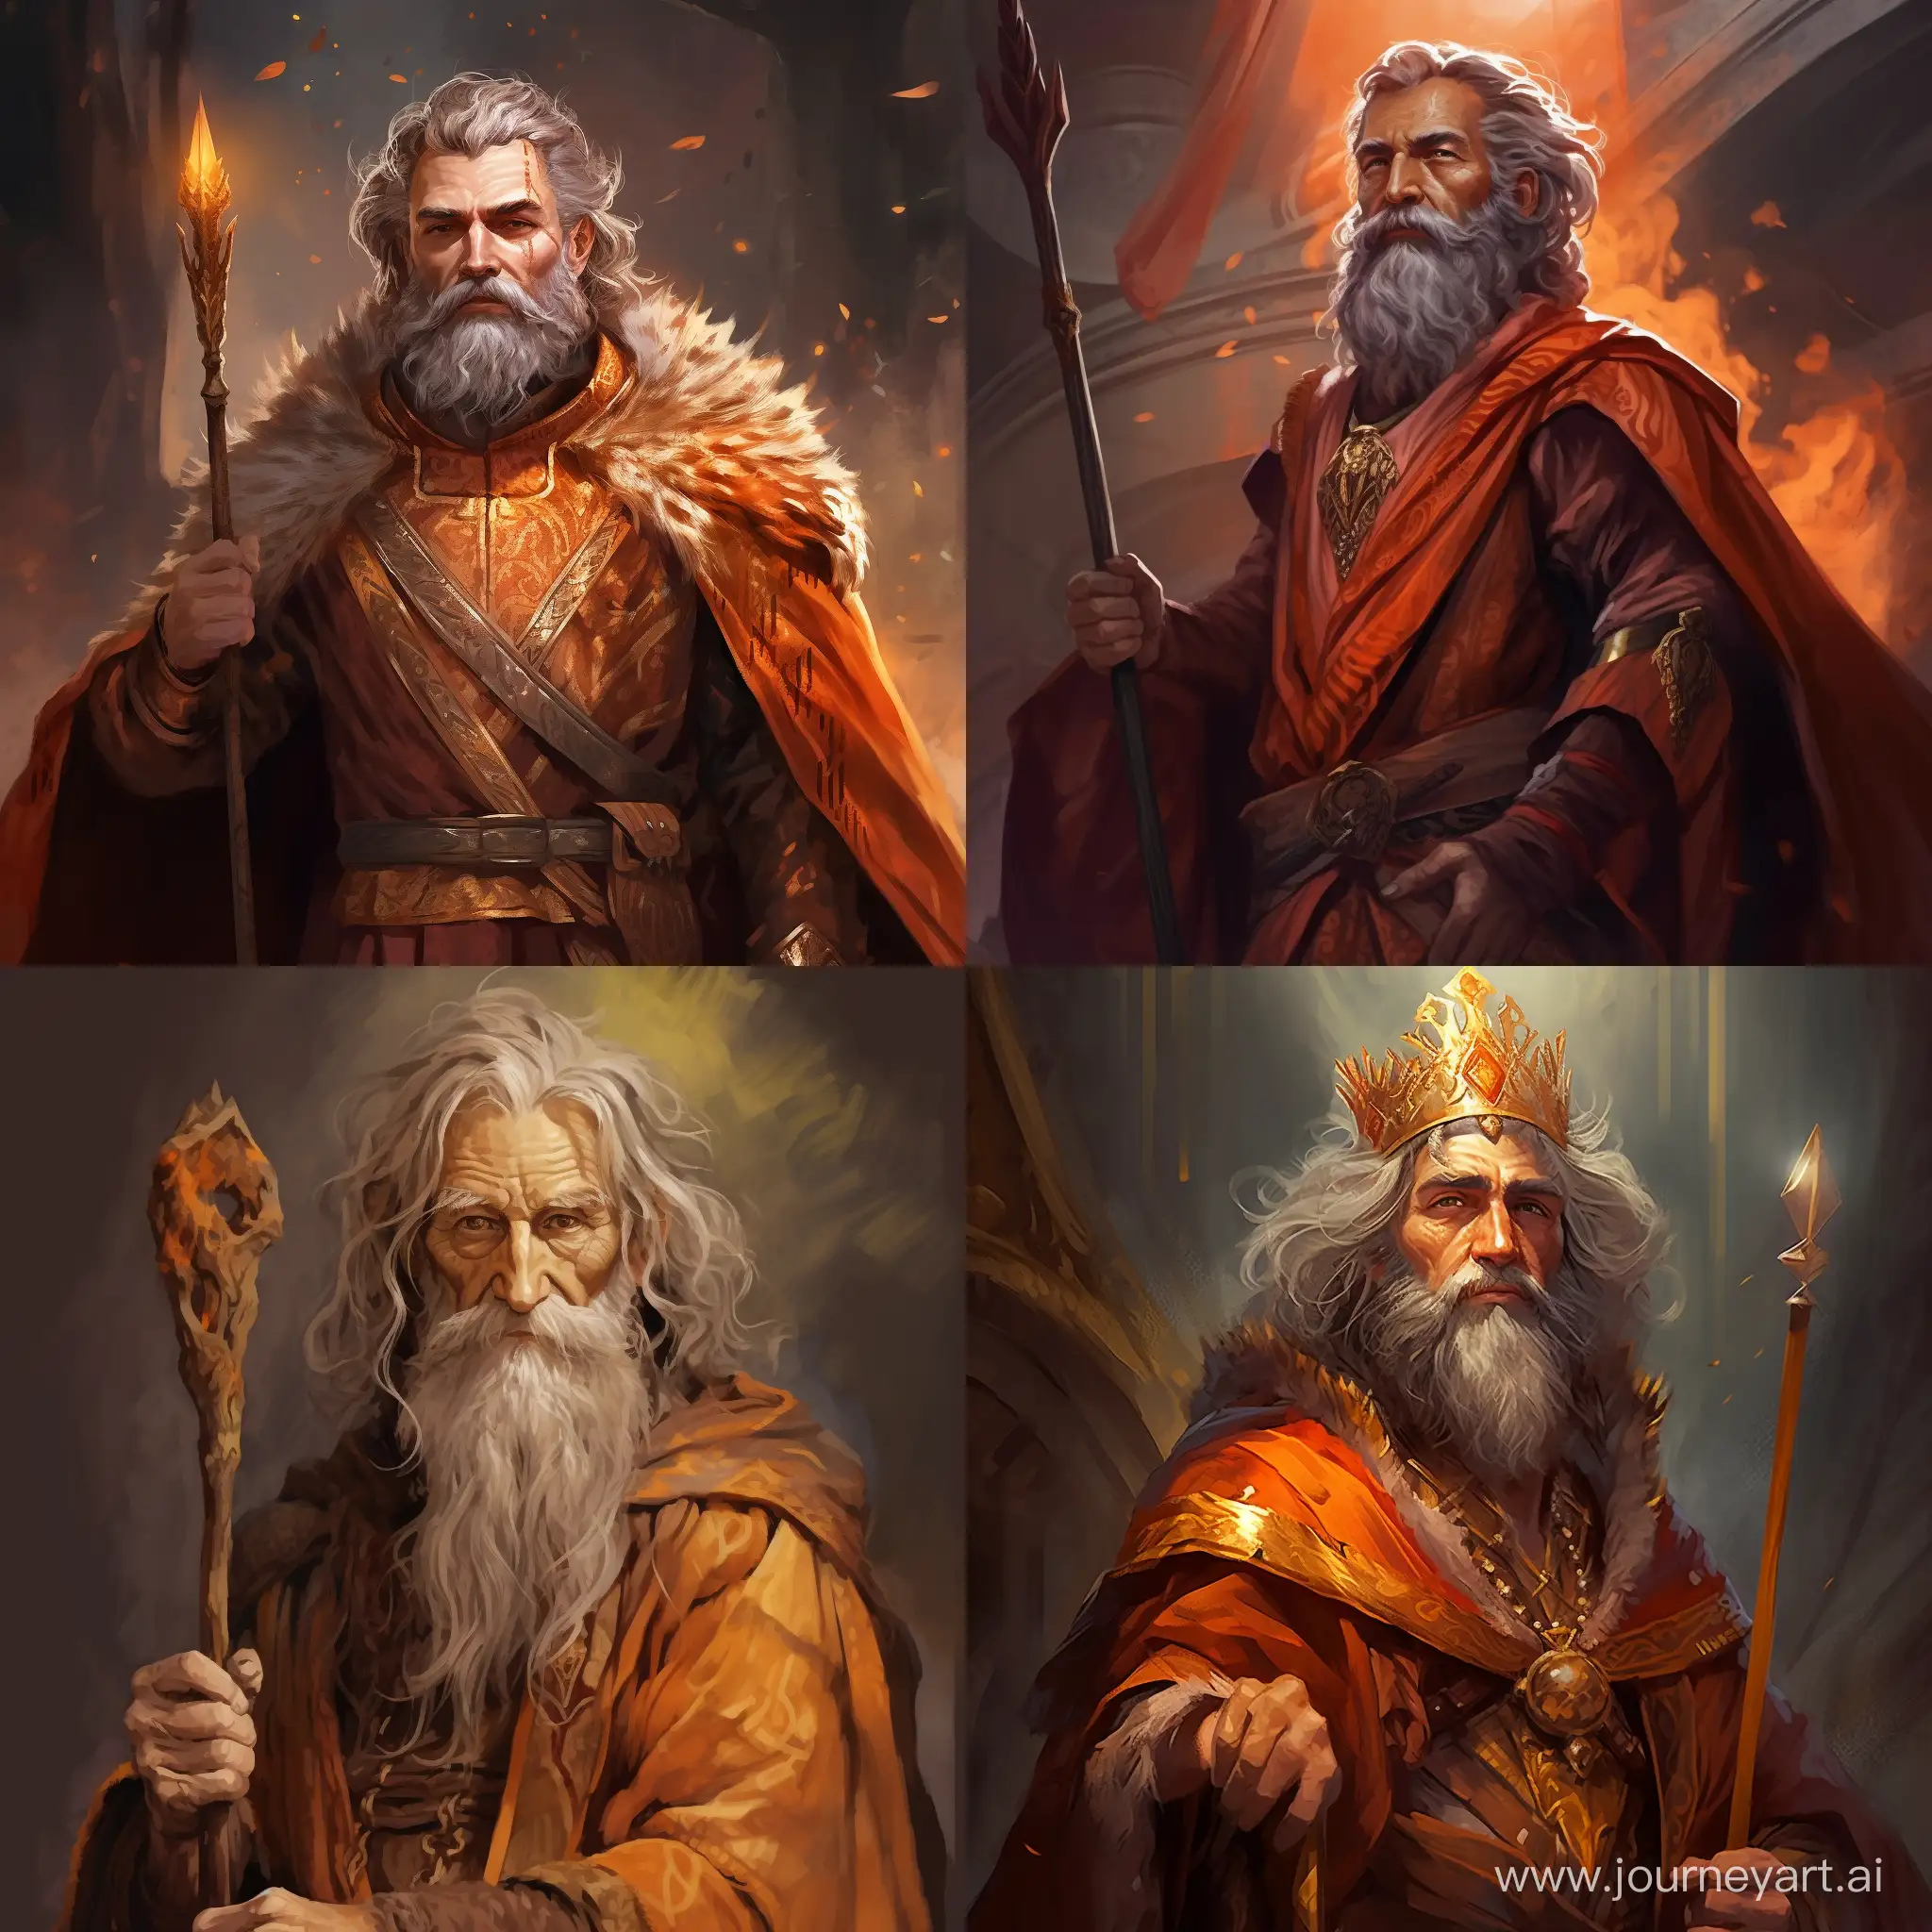 Greg rutkowsky style, kráľ, čarodejník, druid, elf, s kuzelnou paliciou v ruke, oblečenie v oranžovo hnedom prevedení